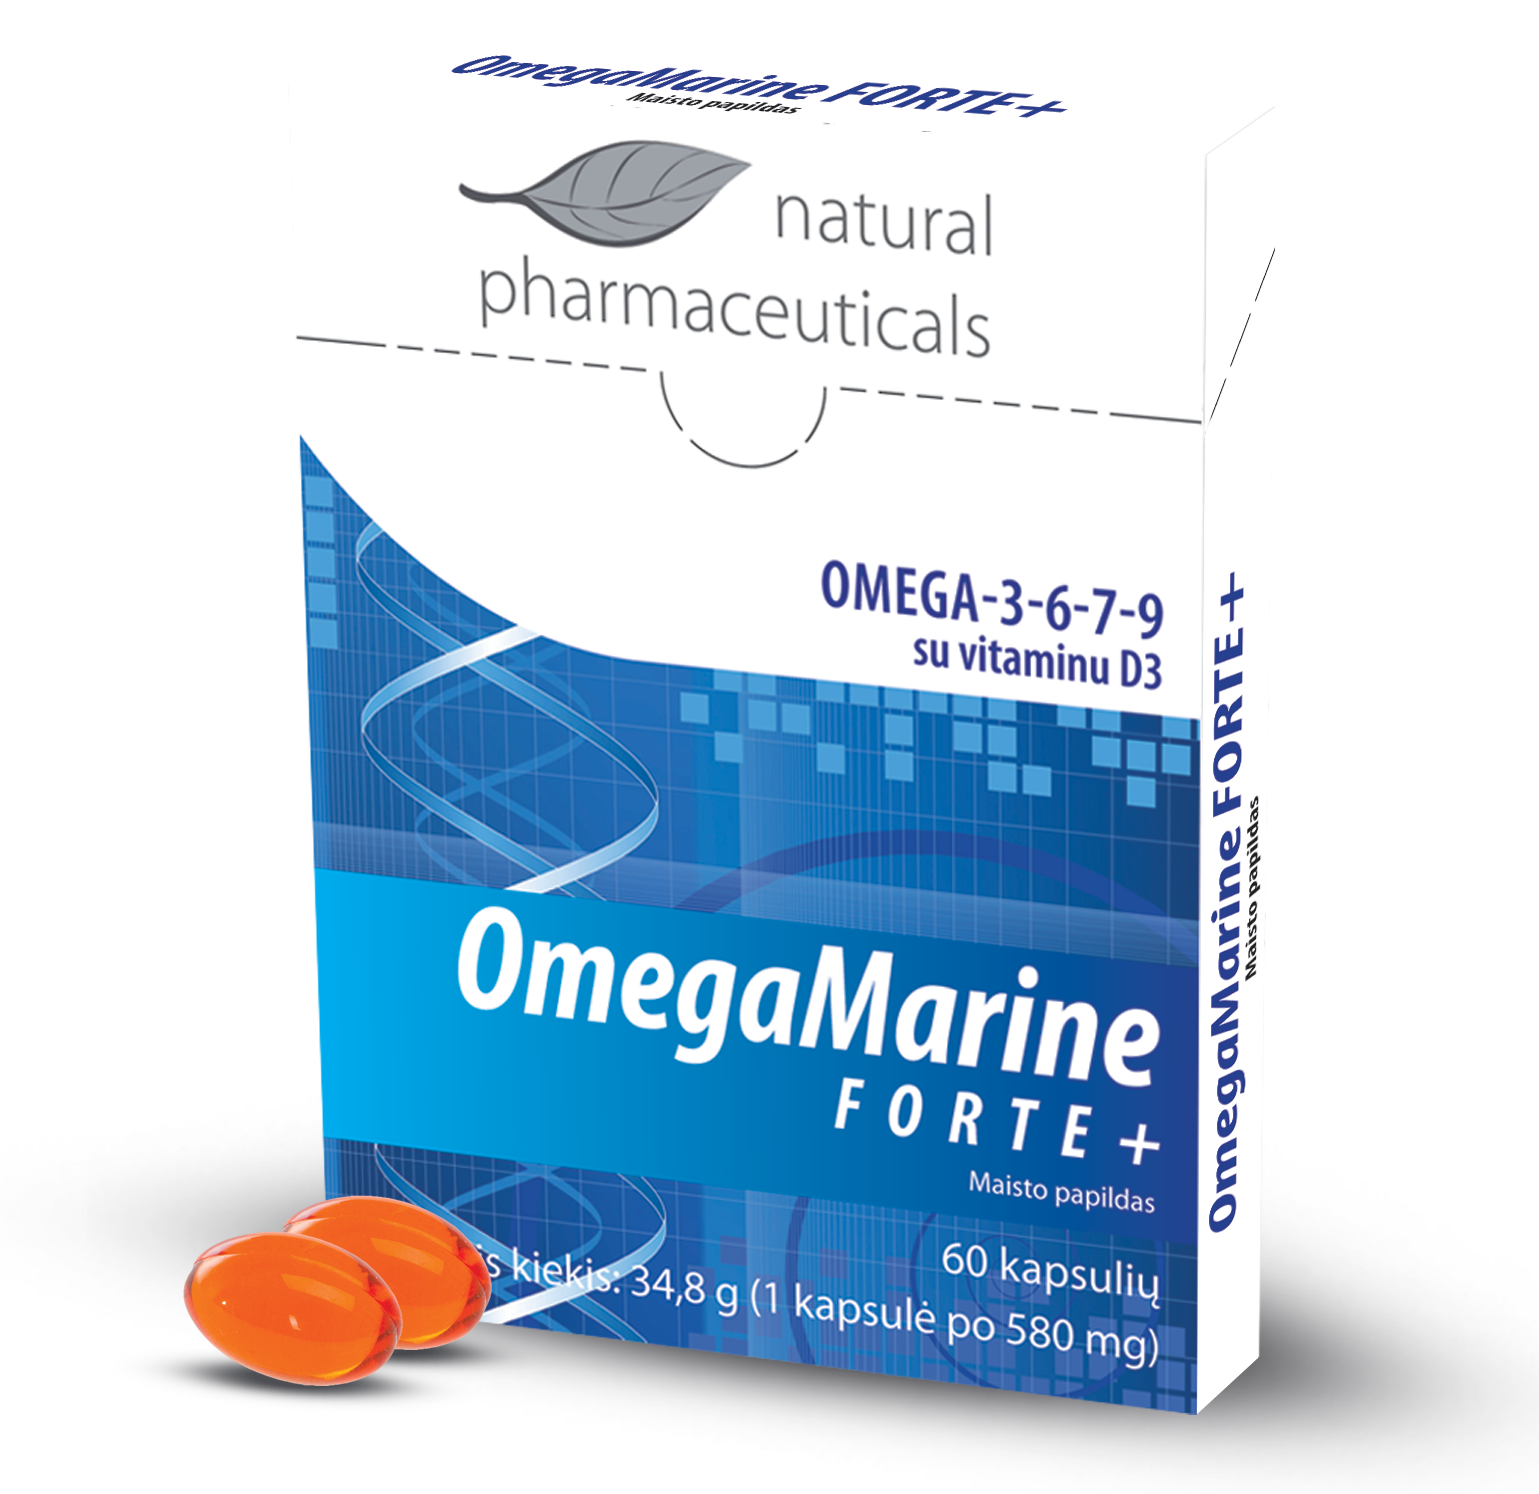 OmegaMarine FORTE+, 60